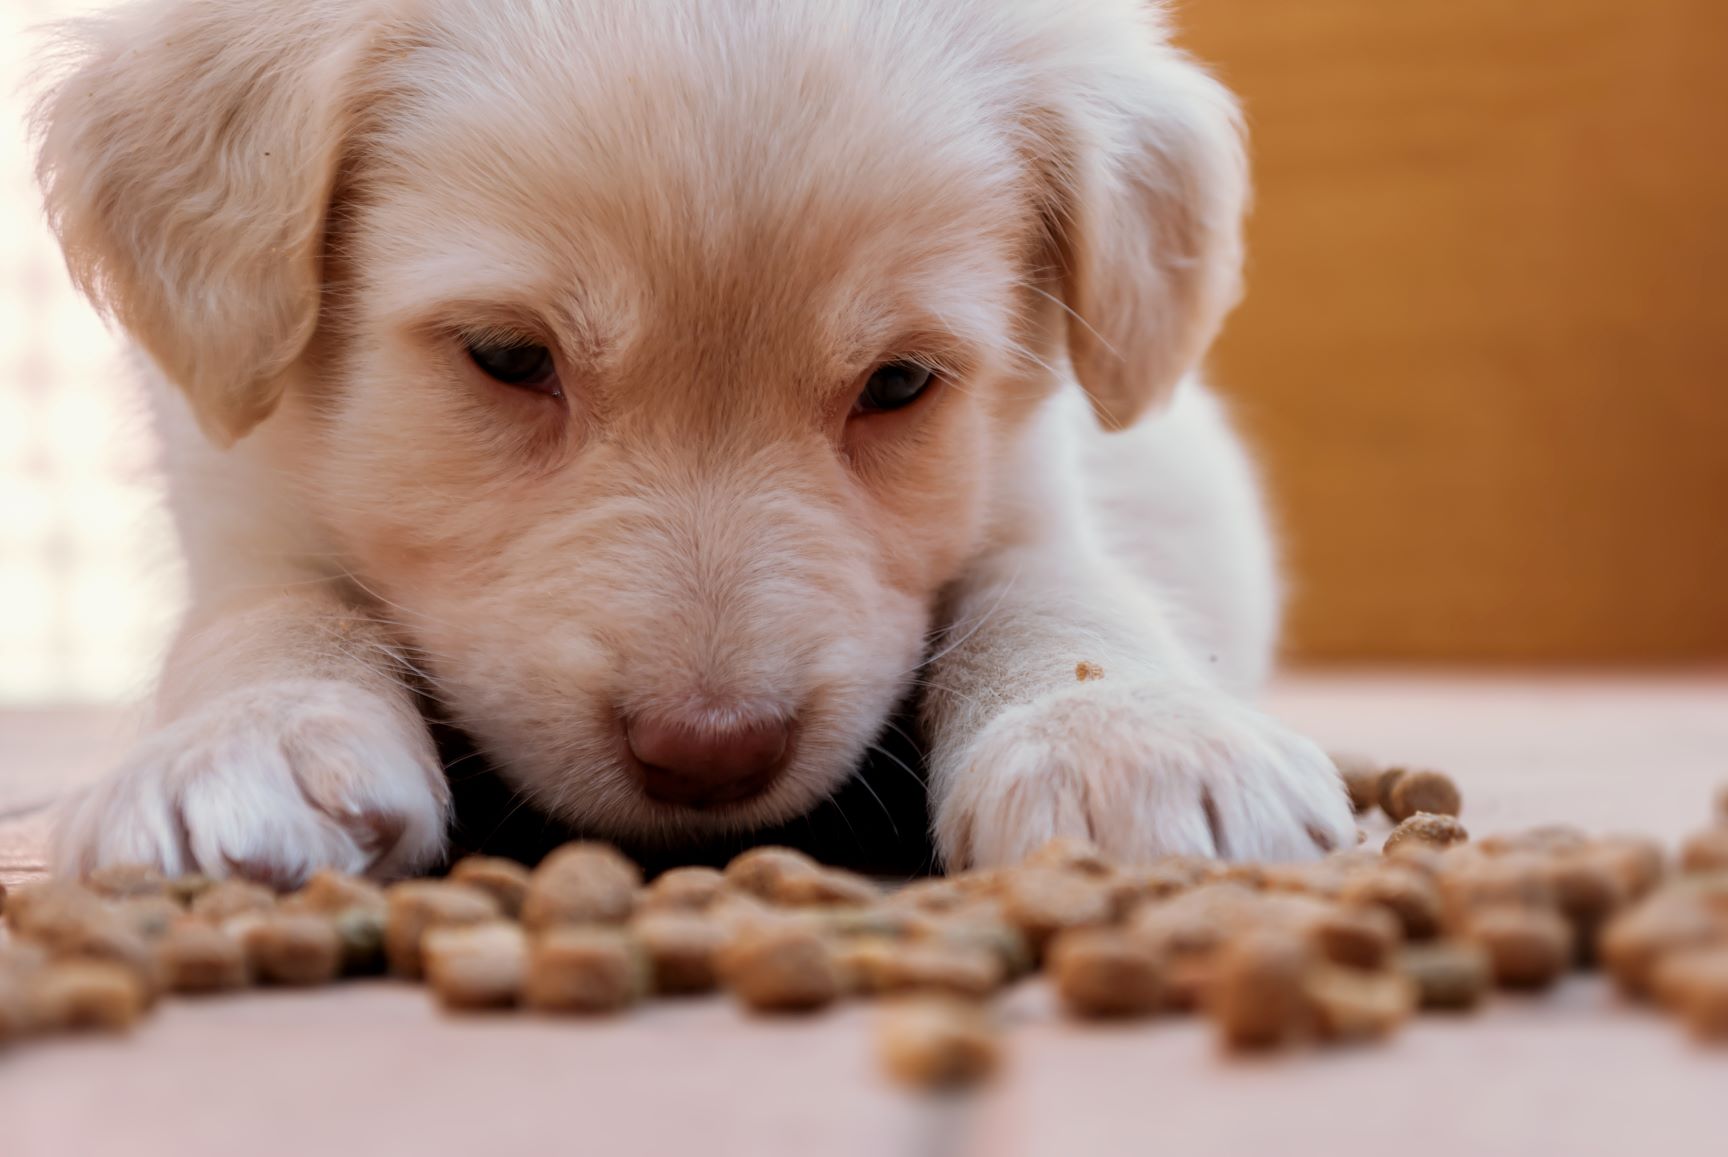 Contratado Cúal Dispersión Cantidad de comida para cachorros | Cachorros zooplus Magazine